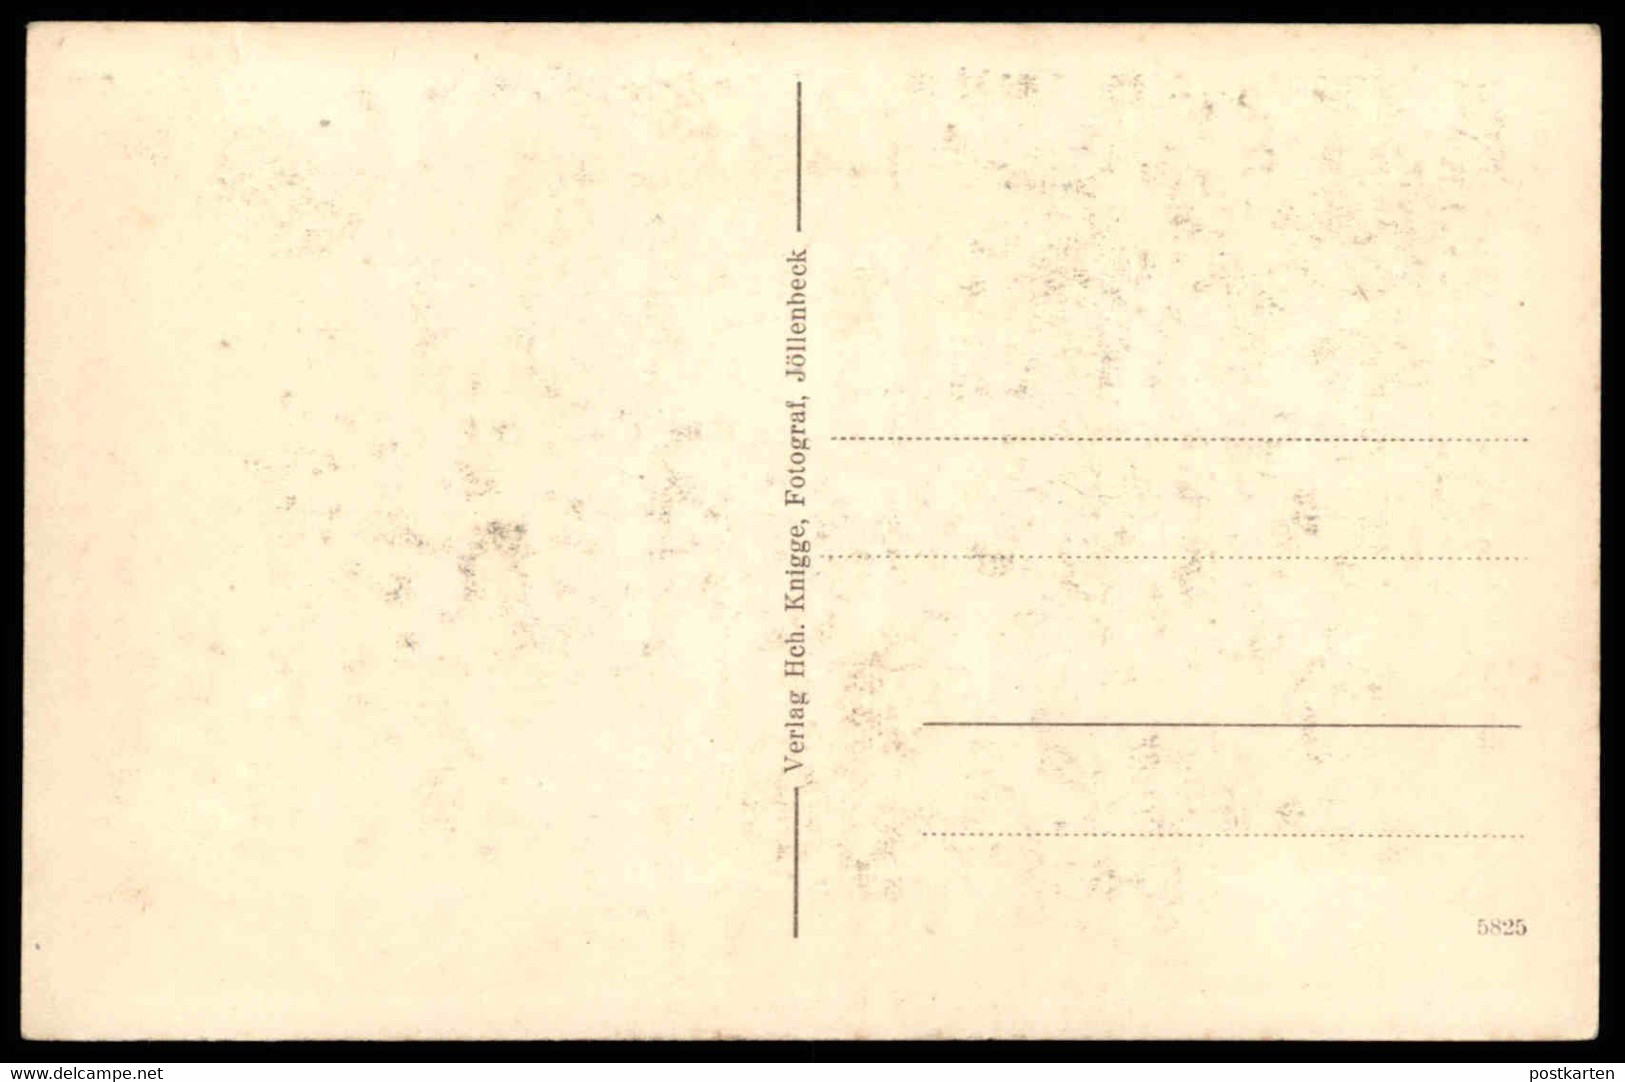 ALTE POSTKARTE GLOCKENWAGEN DREYEN DEN 17. IV. 1927 ENGER Glocke Bell Clarine Cloche Fest Ansichtskarte Cpa AK Postcard - Enger